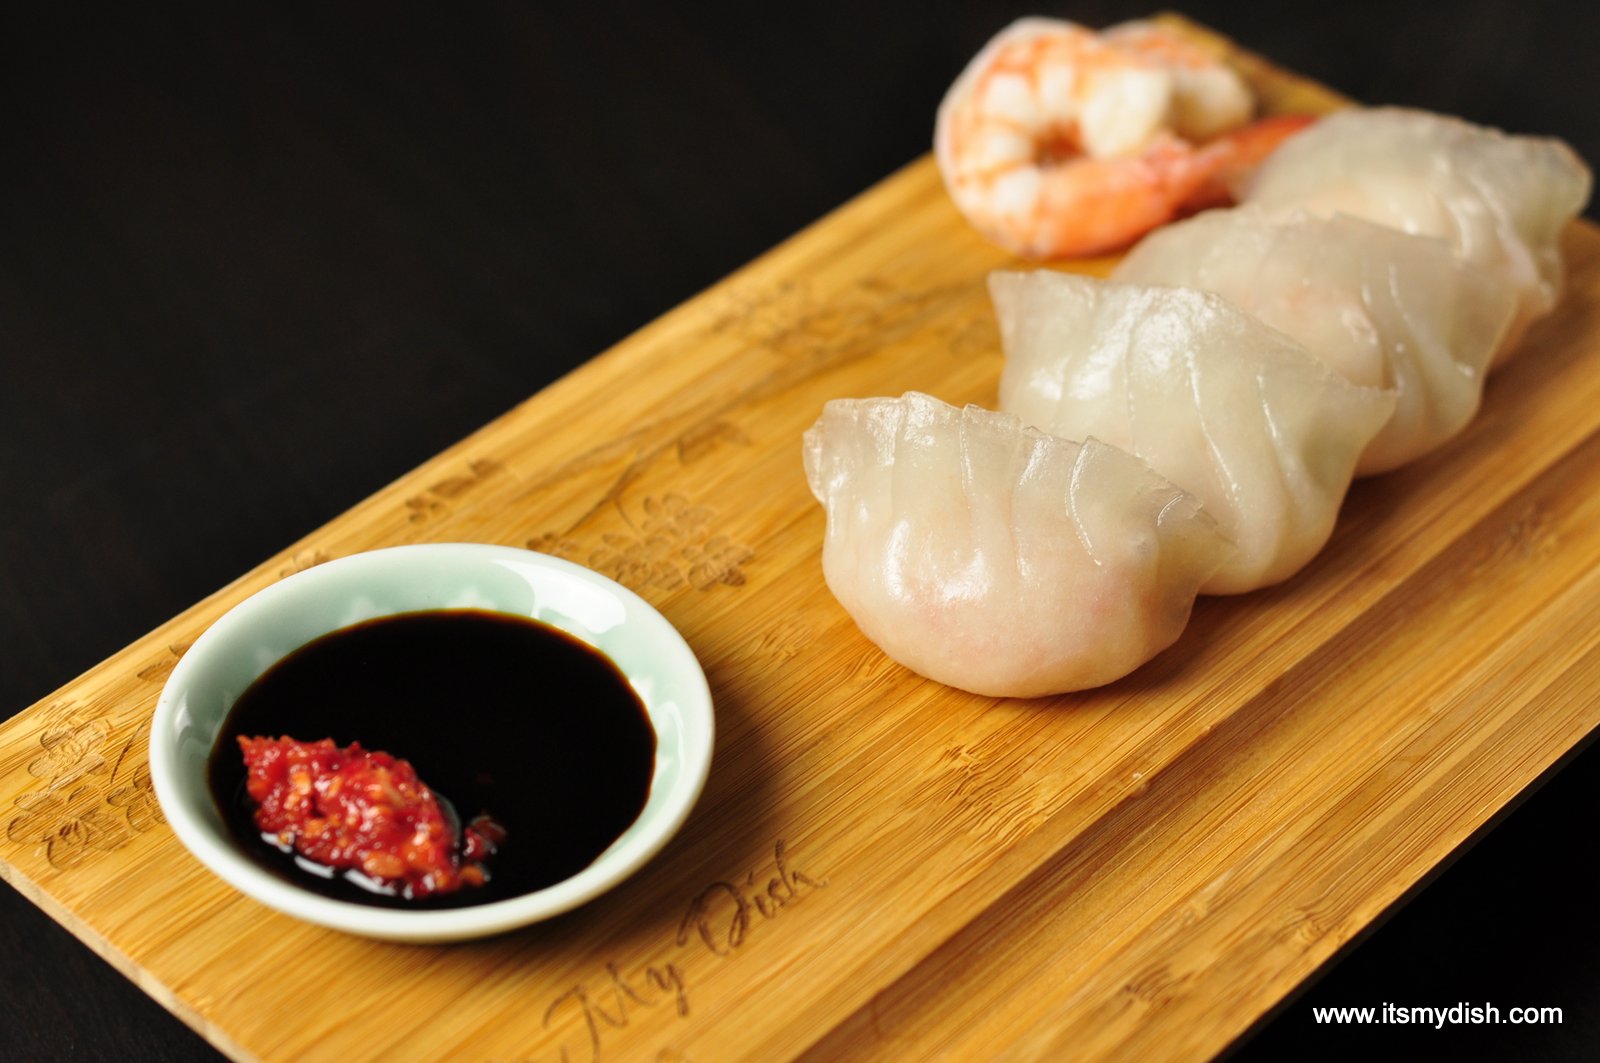 Shrimp dumpling (蝦餃) - It's My Dish